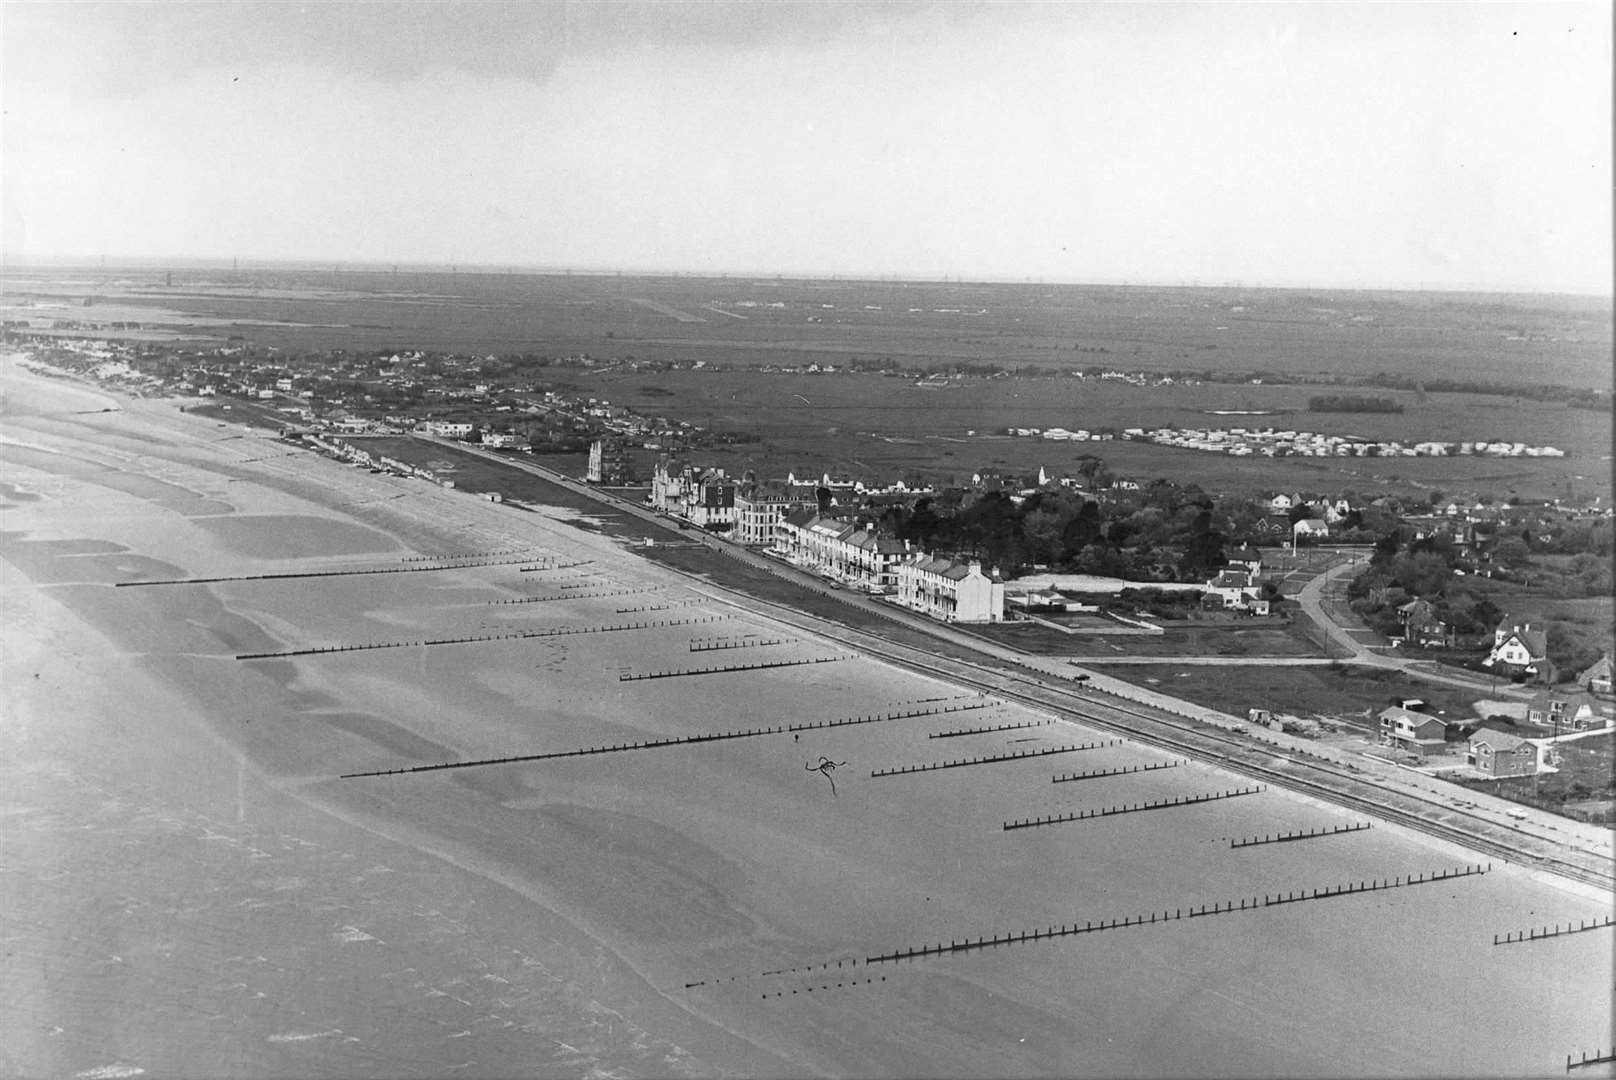 The coast at Littlestone in 1968